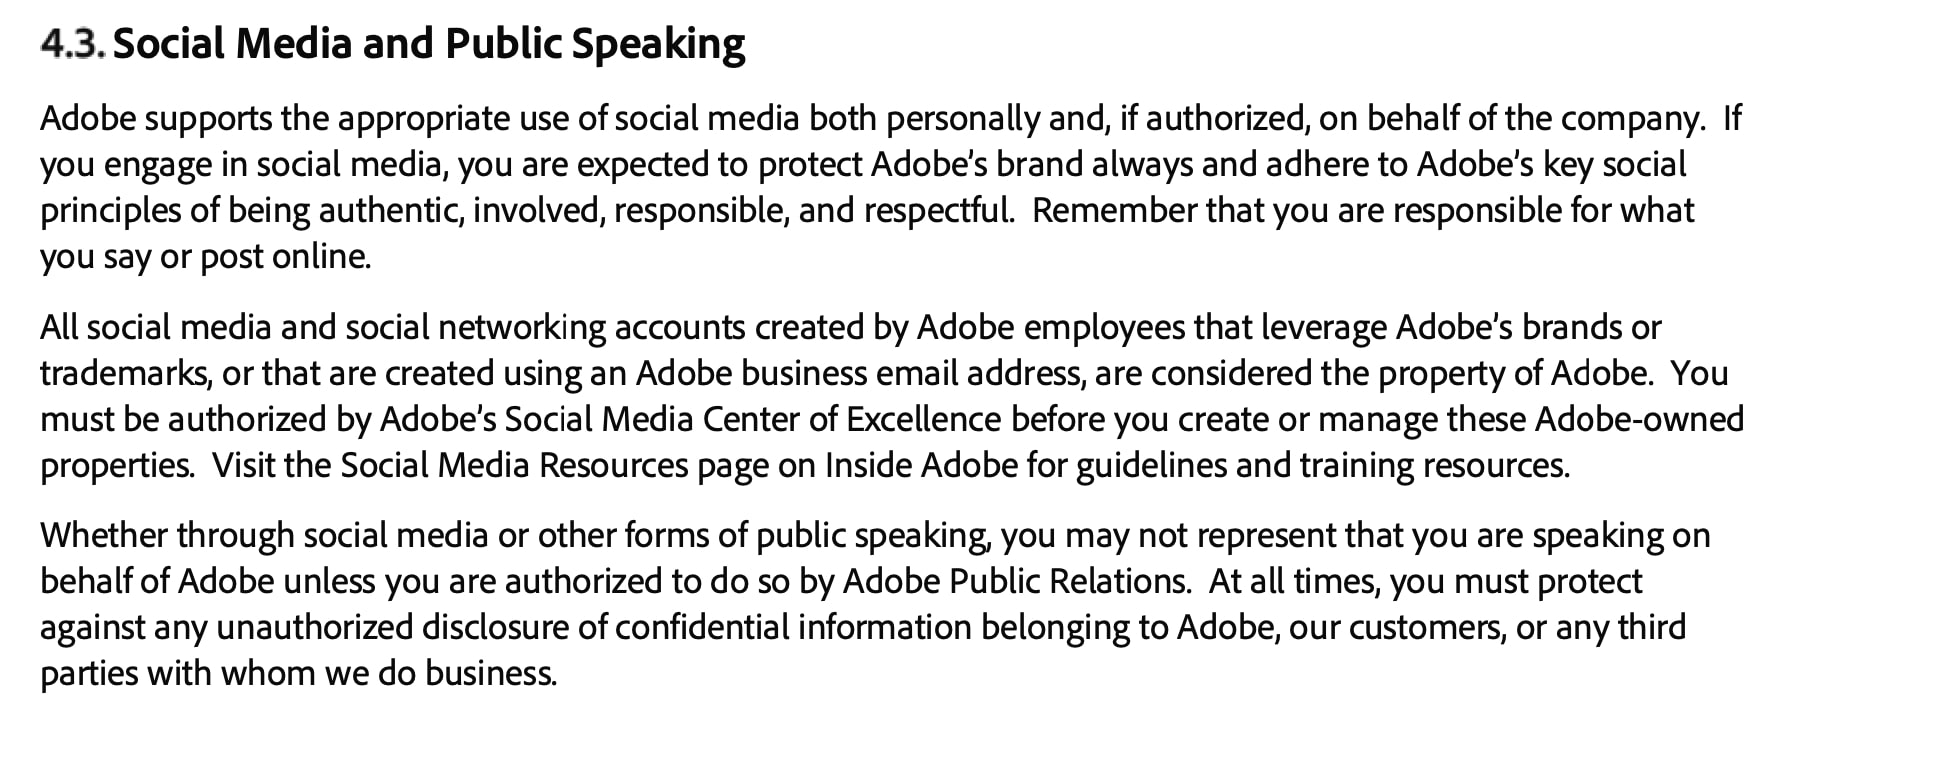 Adobe Social Media Policy.